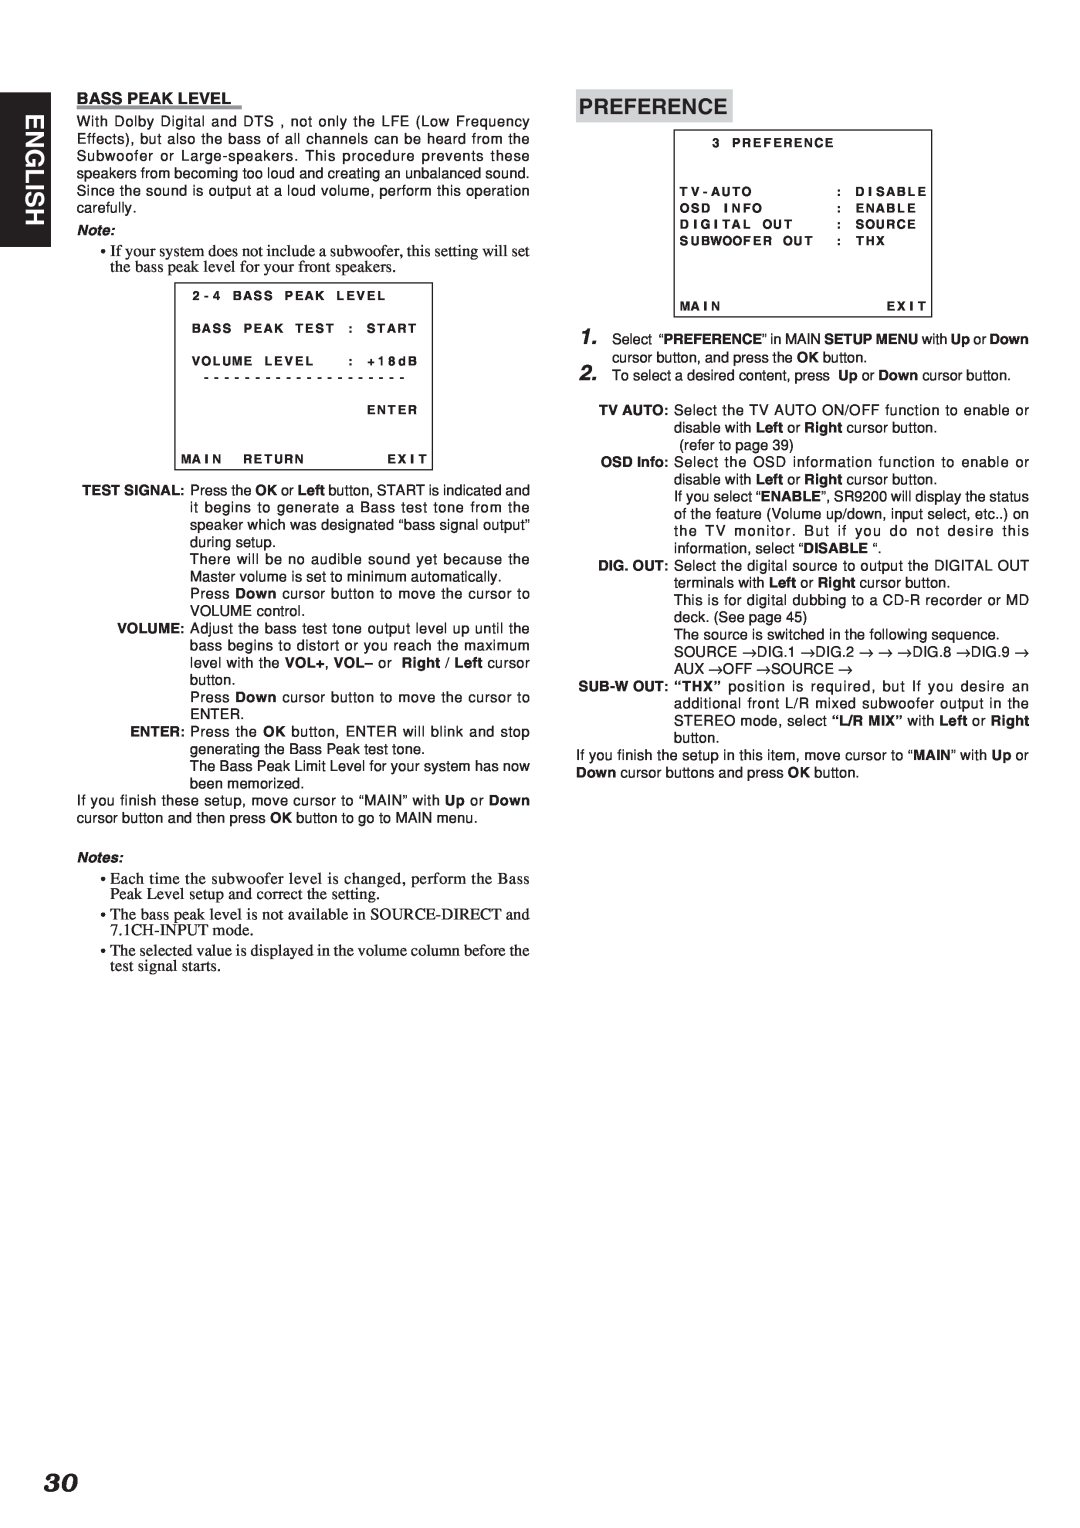 Marantz SR9200 manual English, Preference, Bass Peak Level 